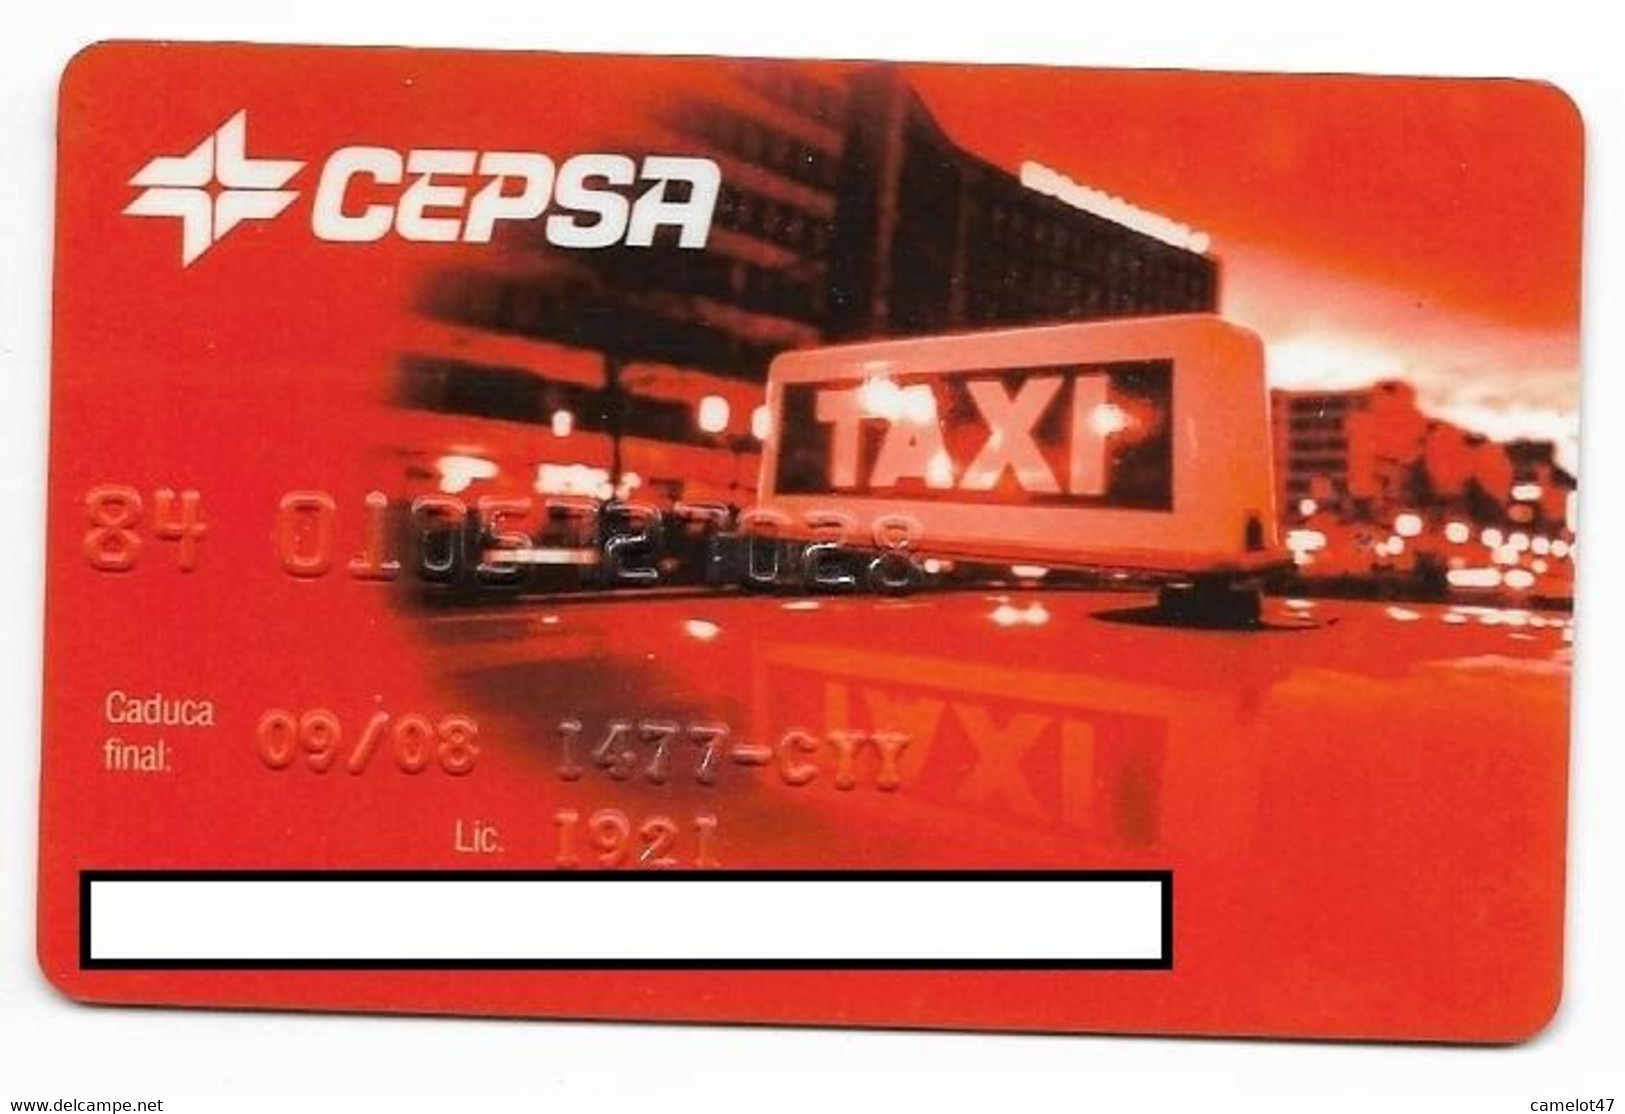 Cepsa Spain, Gas Stations Rewards Magnetic Card, # Cepsa-3  NOT A PHONE CARD - Petrole